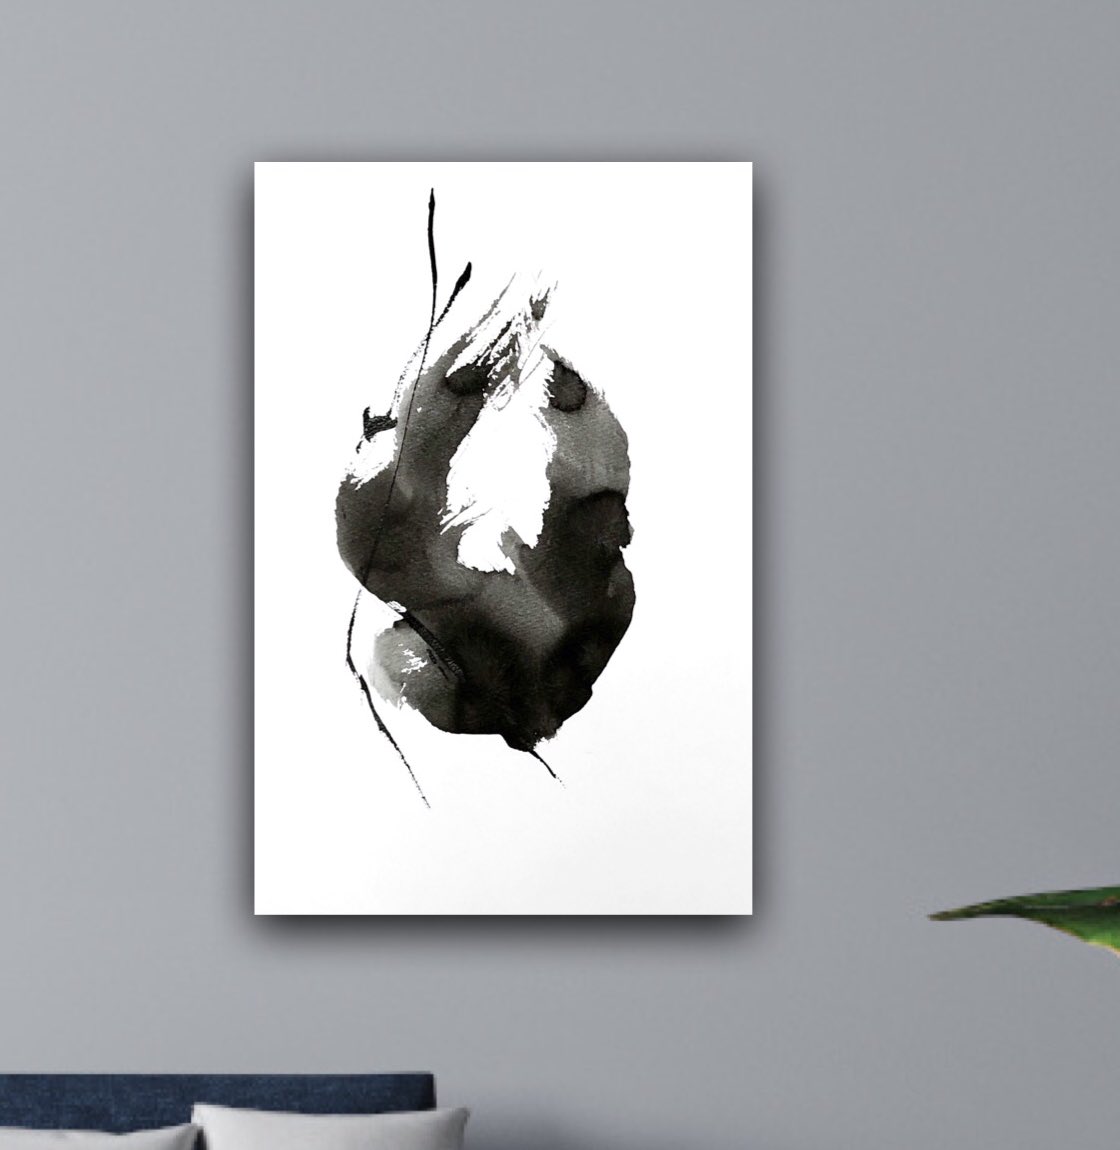 'revolve'　-眩く-

上へ向かいながら回るイメージを表現しました。

#shodo #墨アート #monochromeart